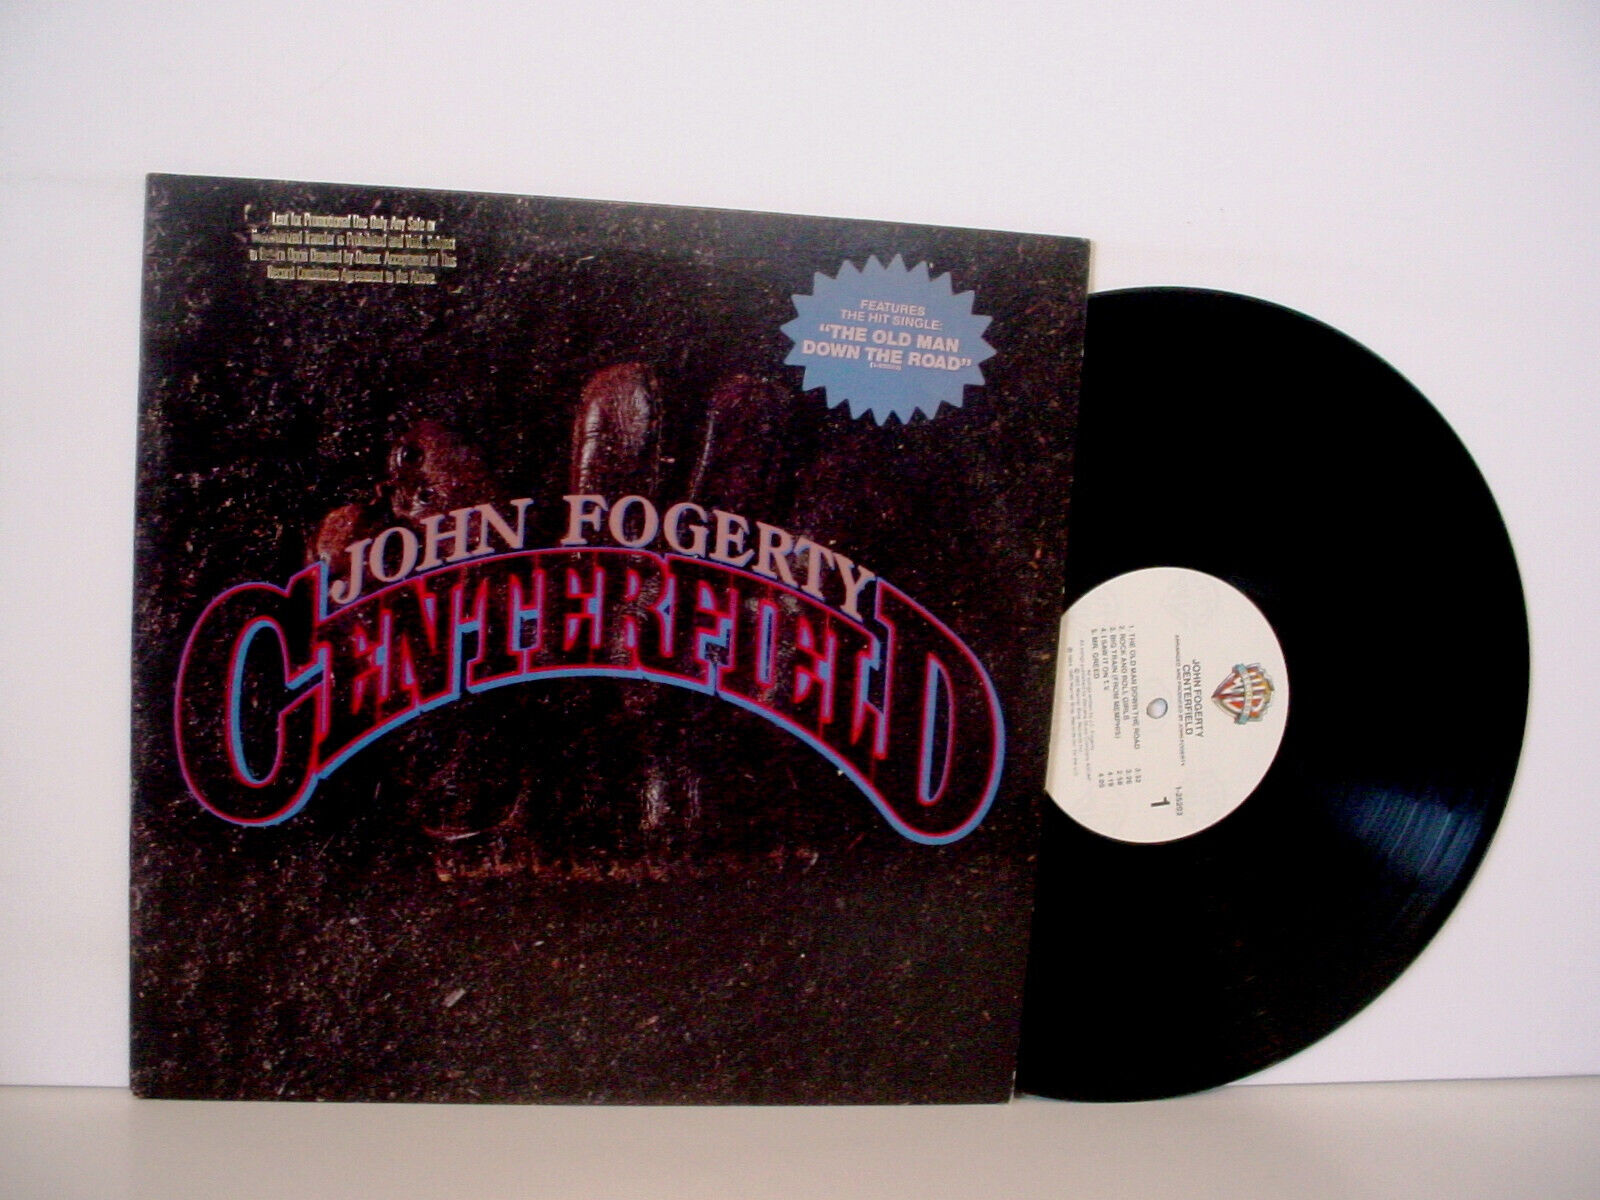 JOHN FOGERTY "Centerfield" Original PROMO VINYL LP 1984 WB 25203 Promotional CCR